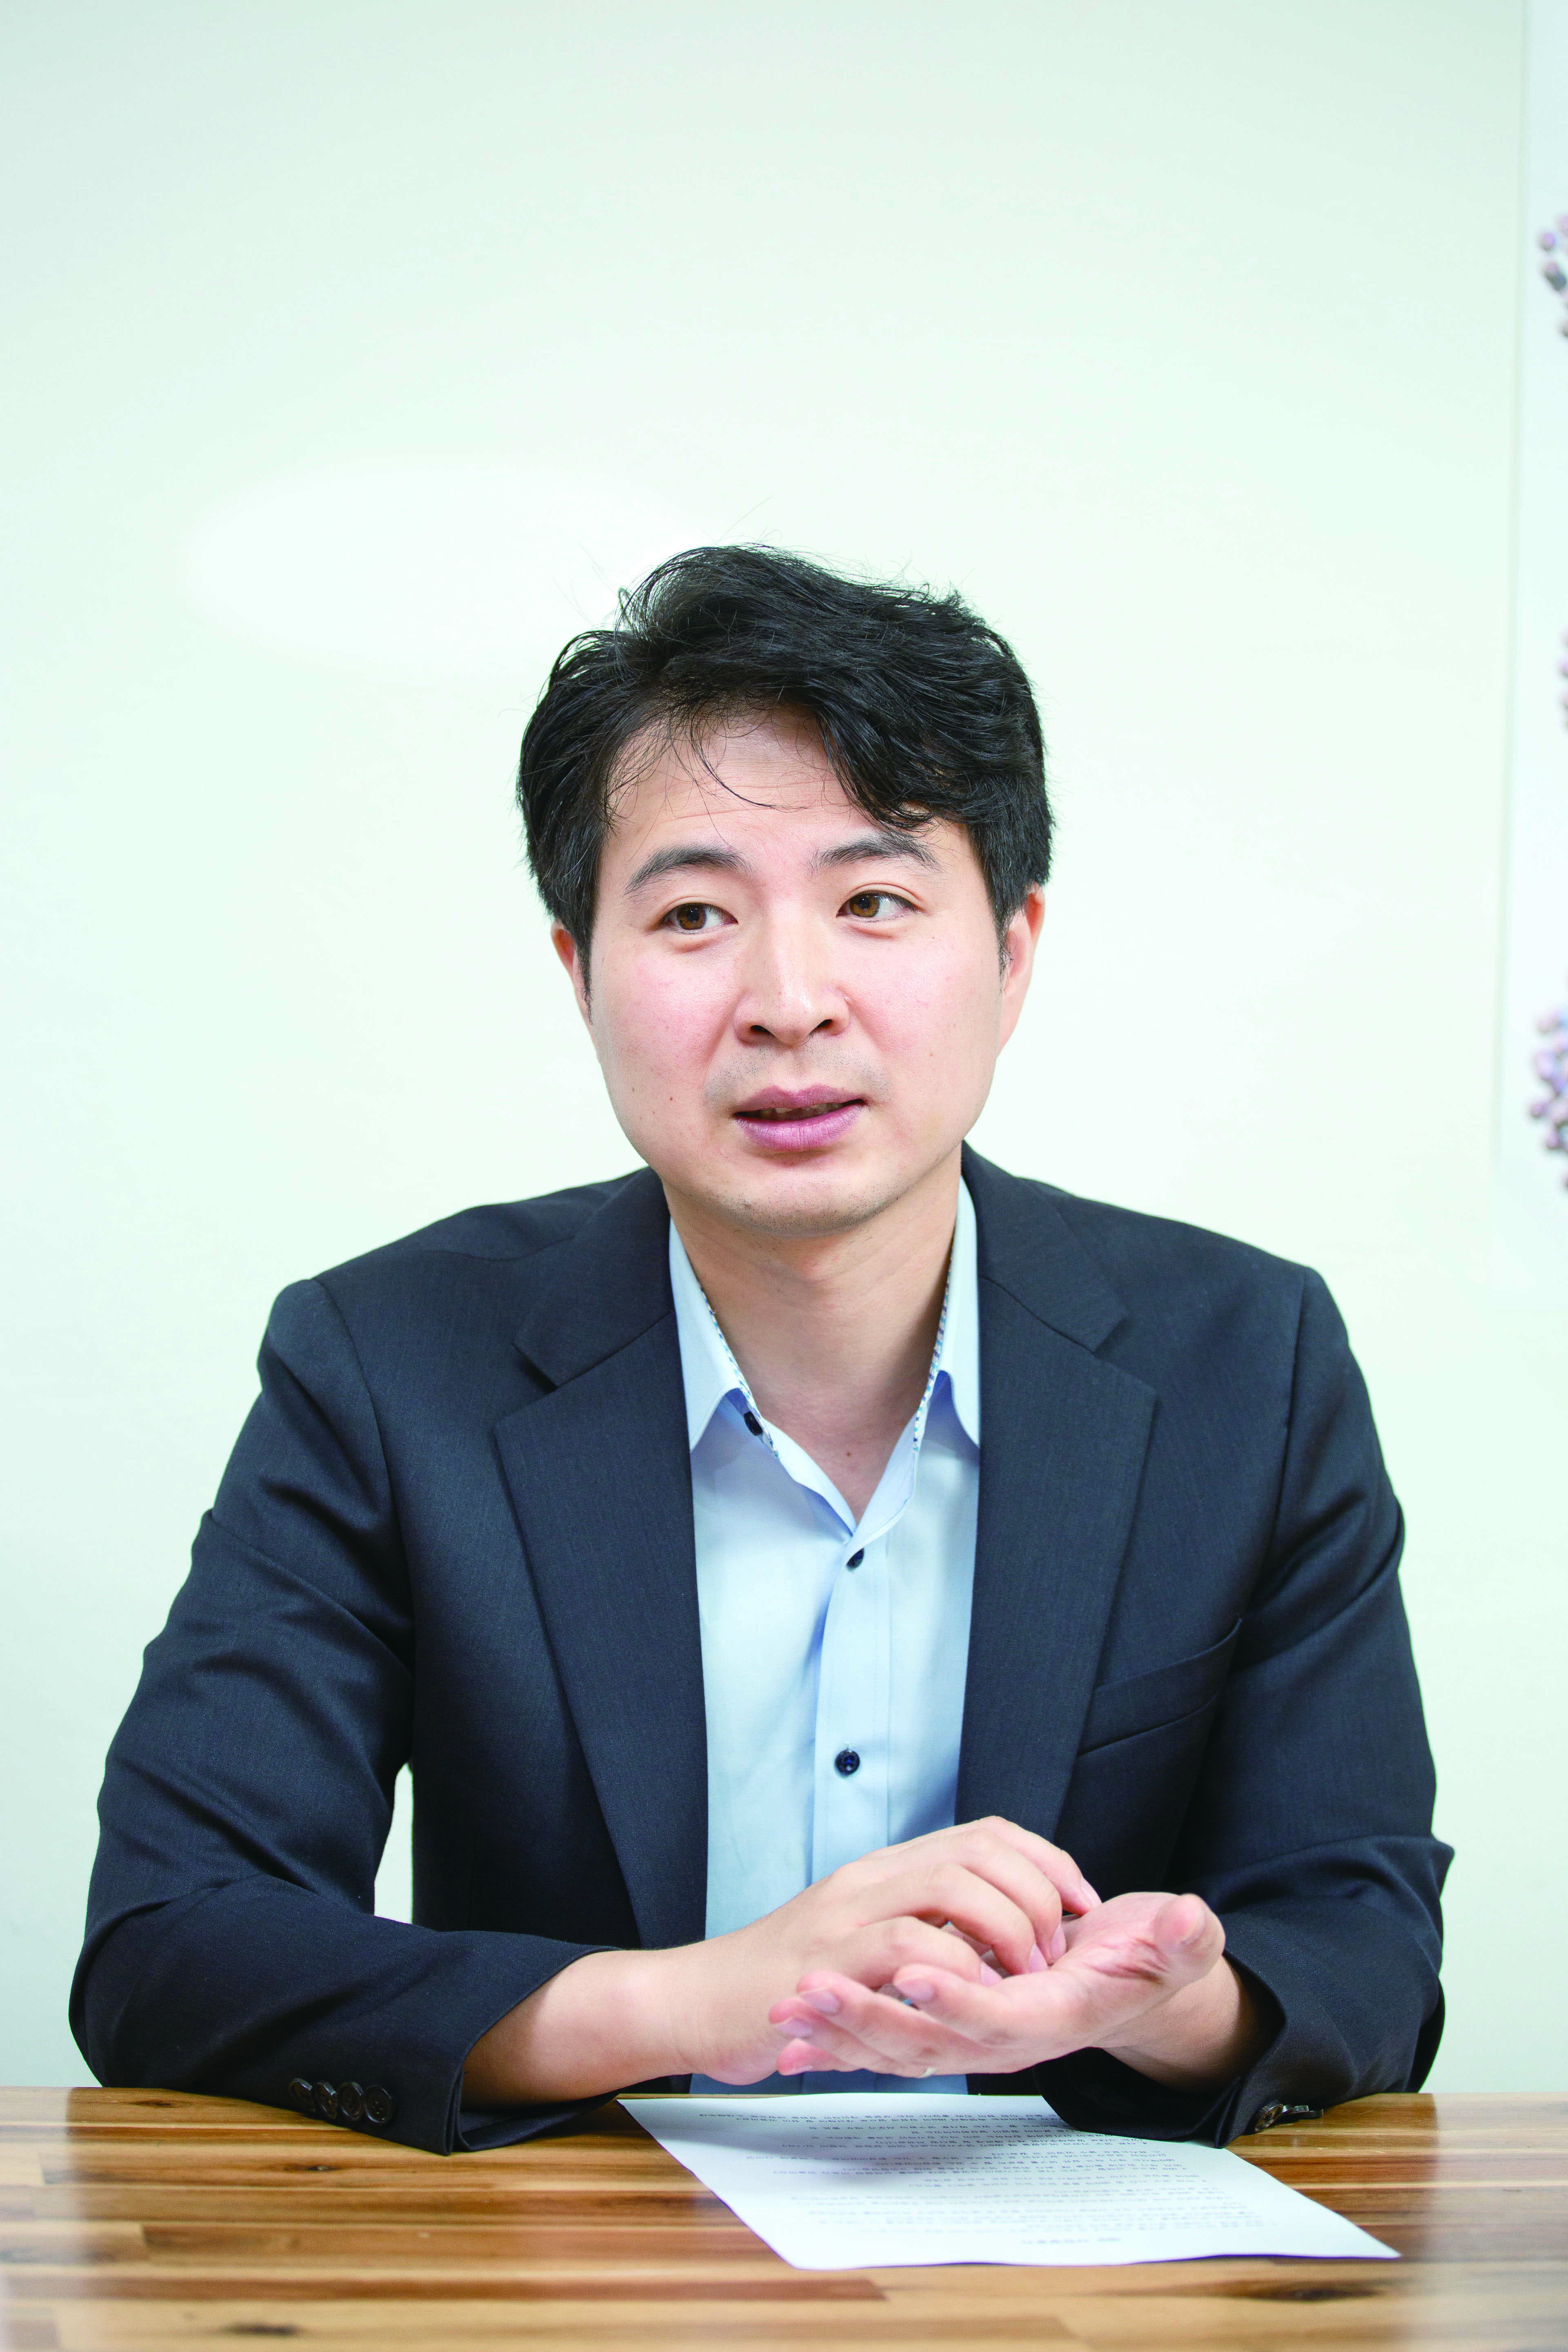 KIM Byung Hyo
            Assistant Professor at Soongsil University Department of Organic Materials and Fiber Engineering
           